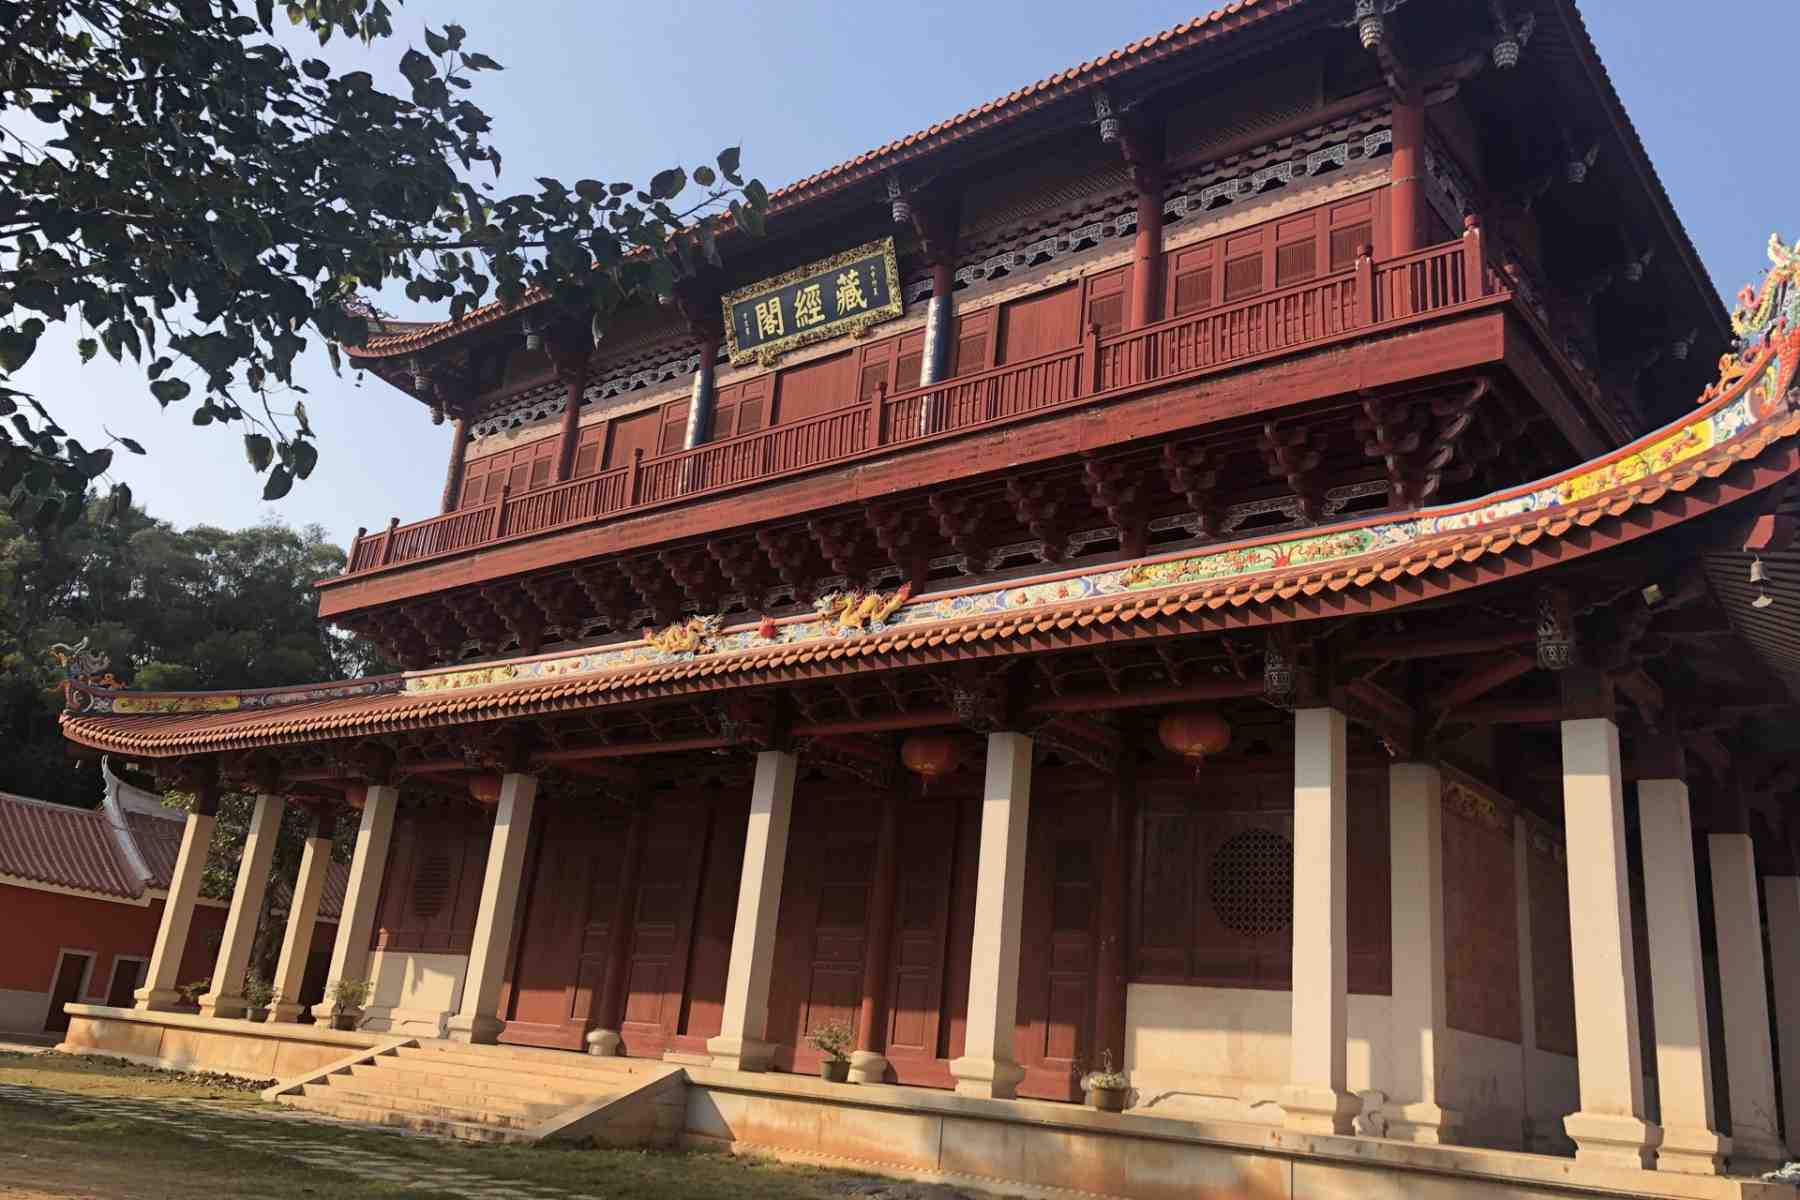 Shaolin Temple